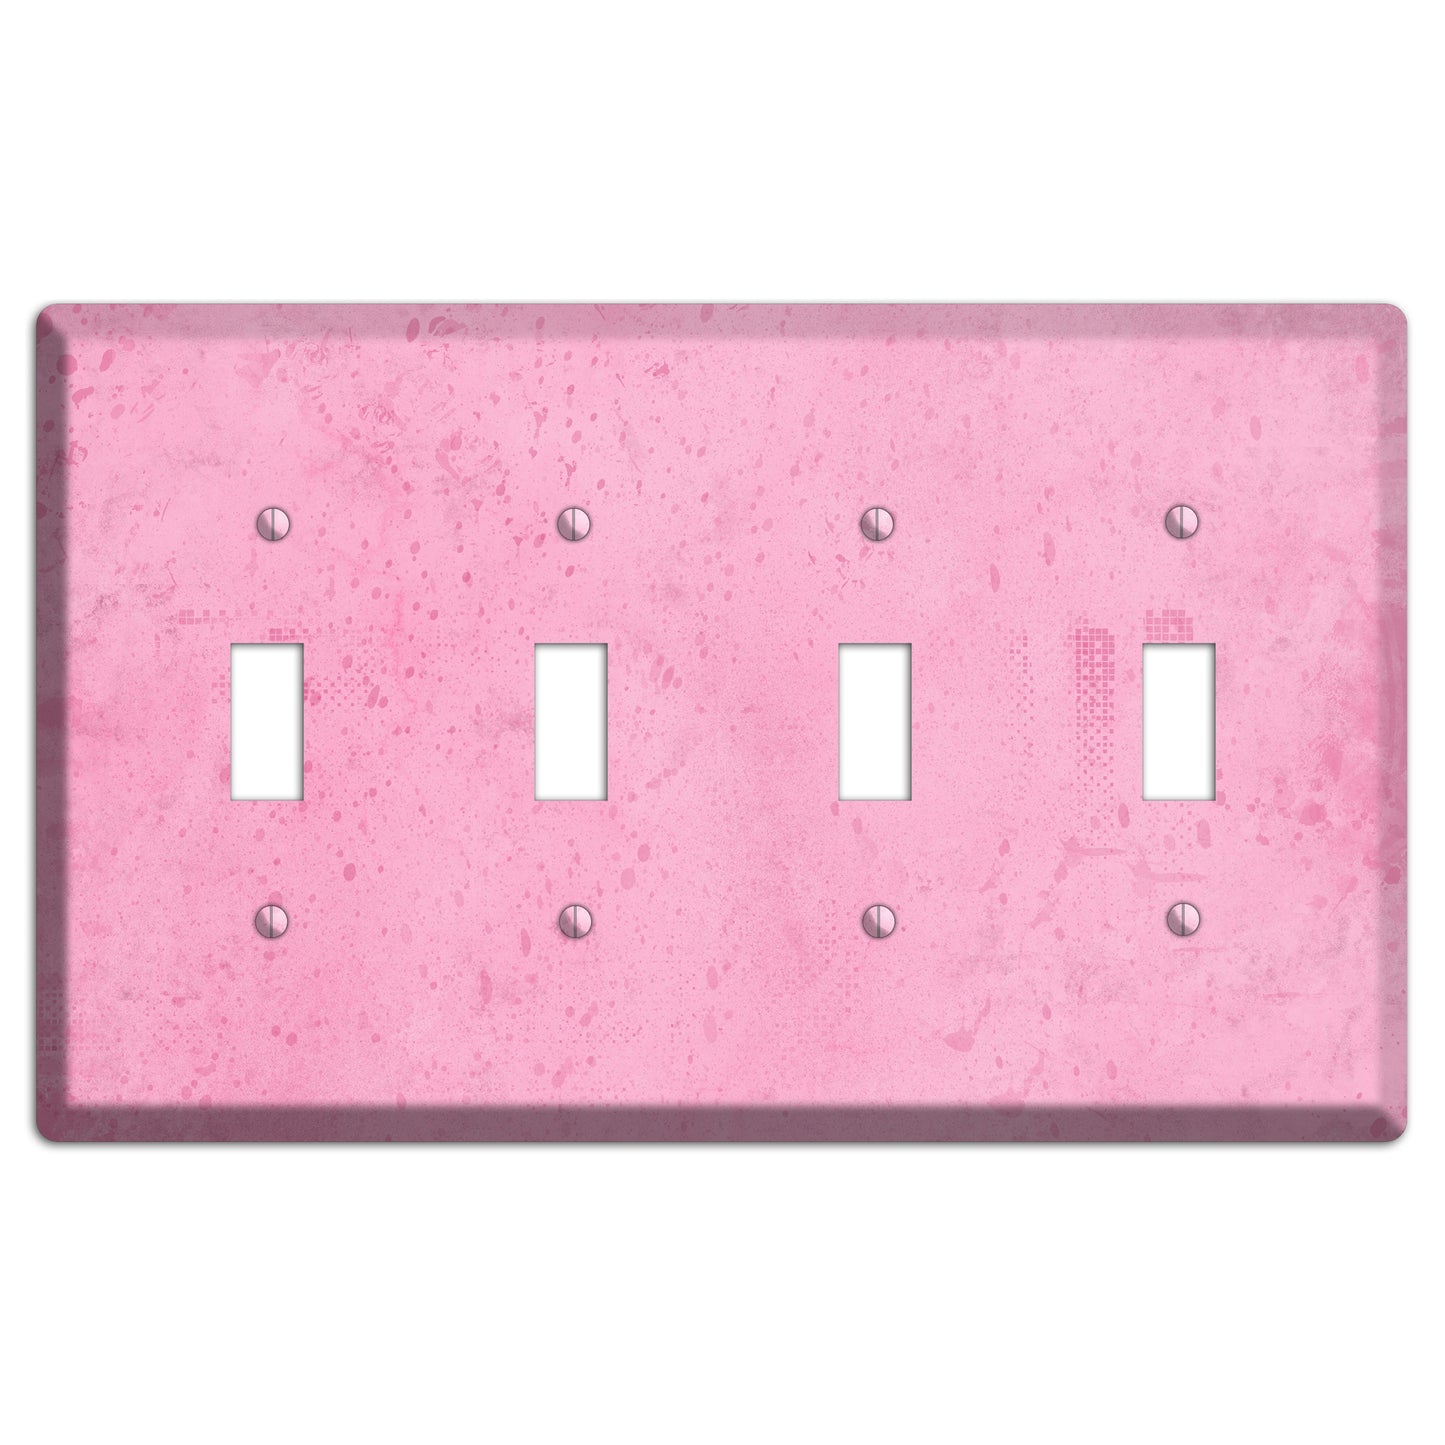 Illusion Pink Texture 4 Toggle Wallplate